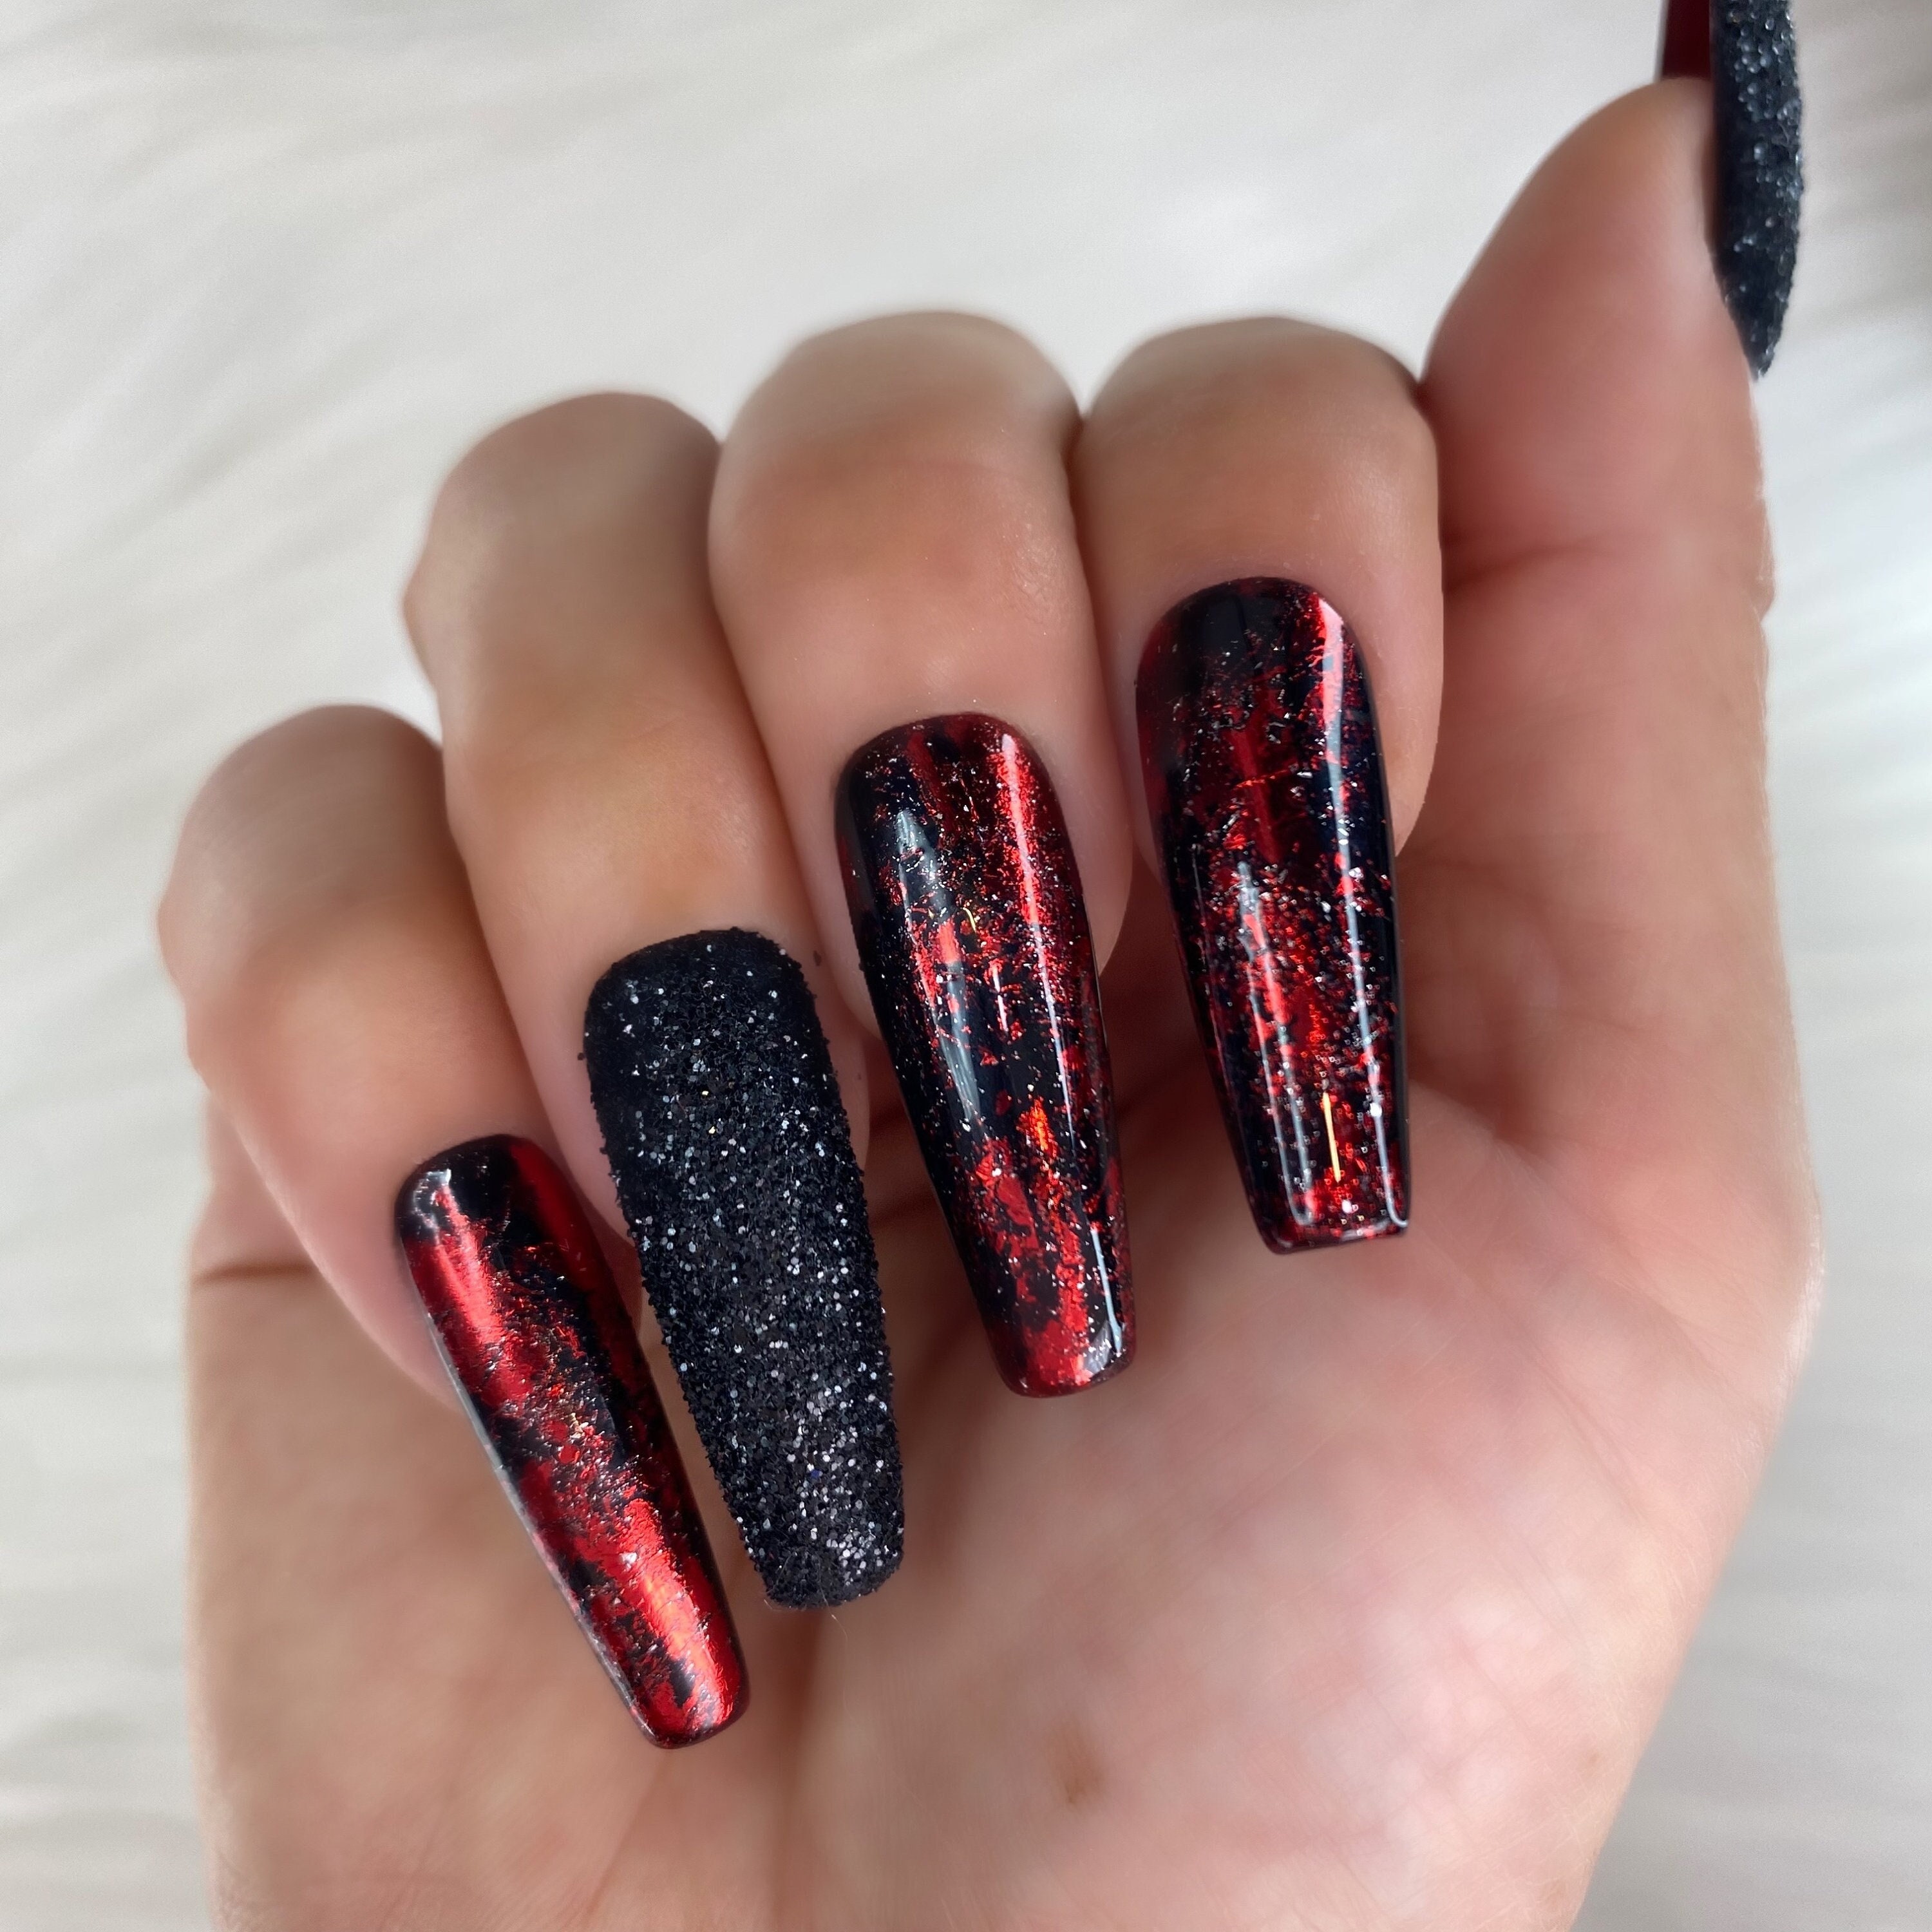 The Nome King Nail Polish - red/black duochrome creme – Fanchromatic Nails